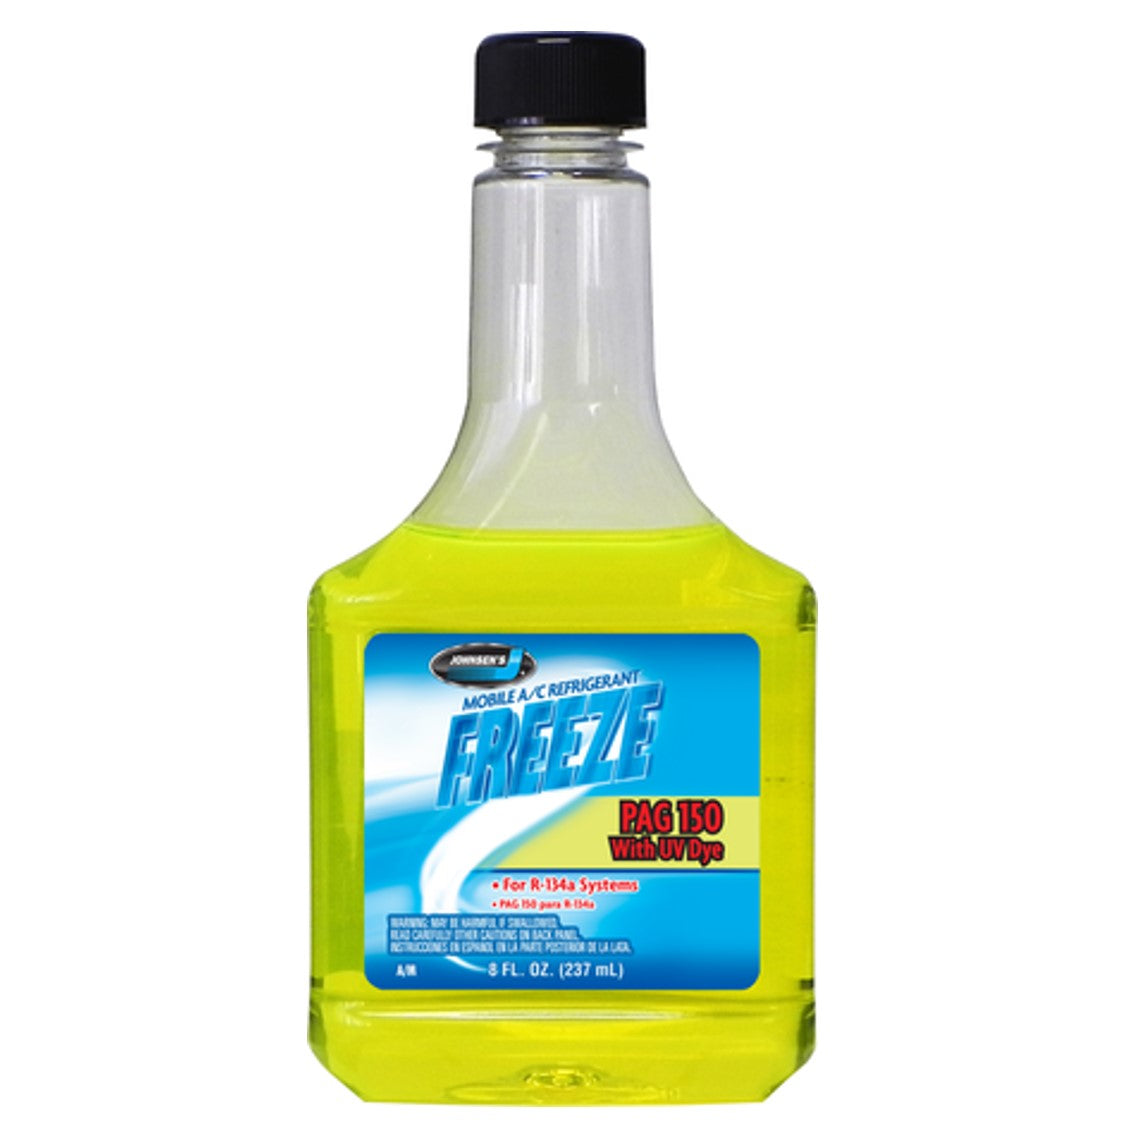 Johnsen PAG 150 Oil w/ UV Dye A/C Compressor Refrigerant Oil R134a 8oz | 01 Bottle